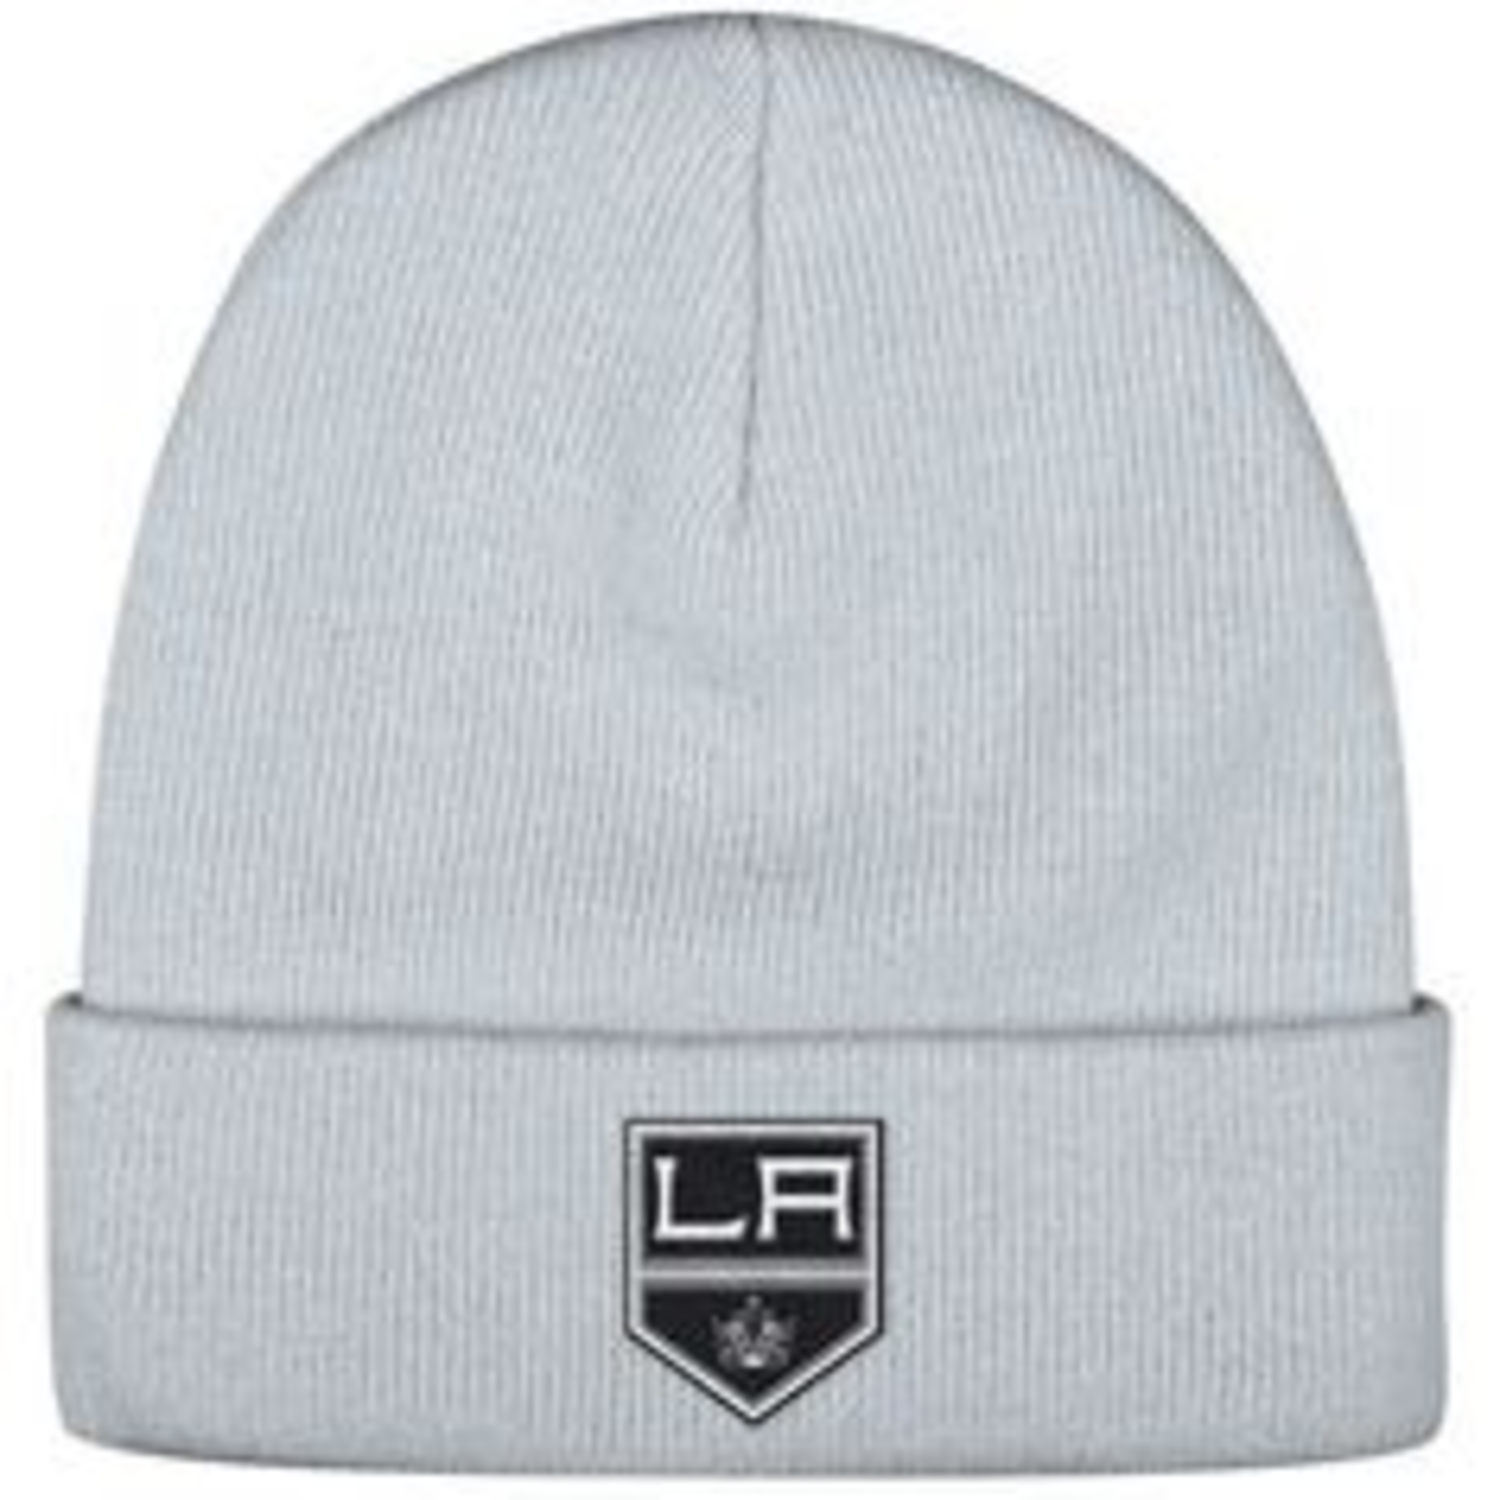 NHL Los Angeles Kings Reebok Basic Cuffed Knit Gray - The Locker